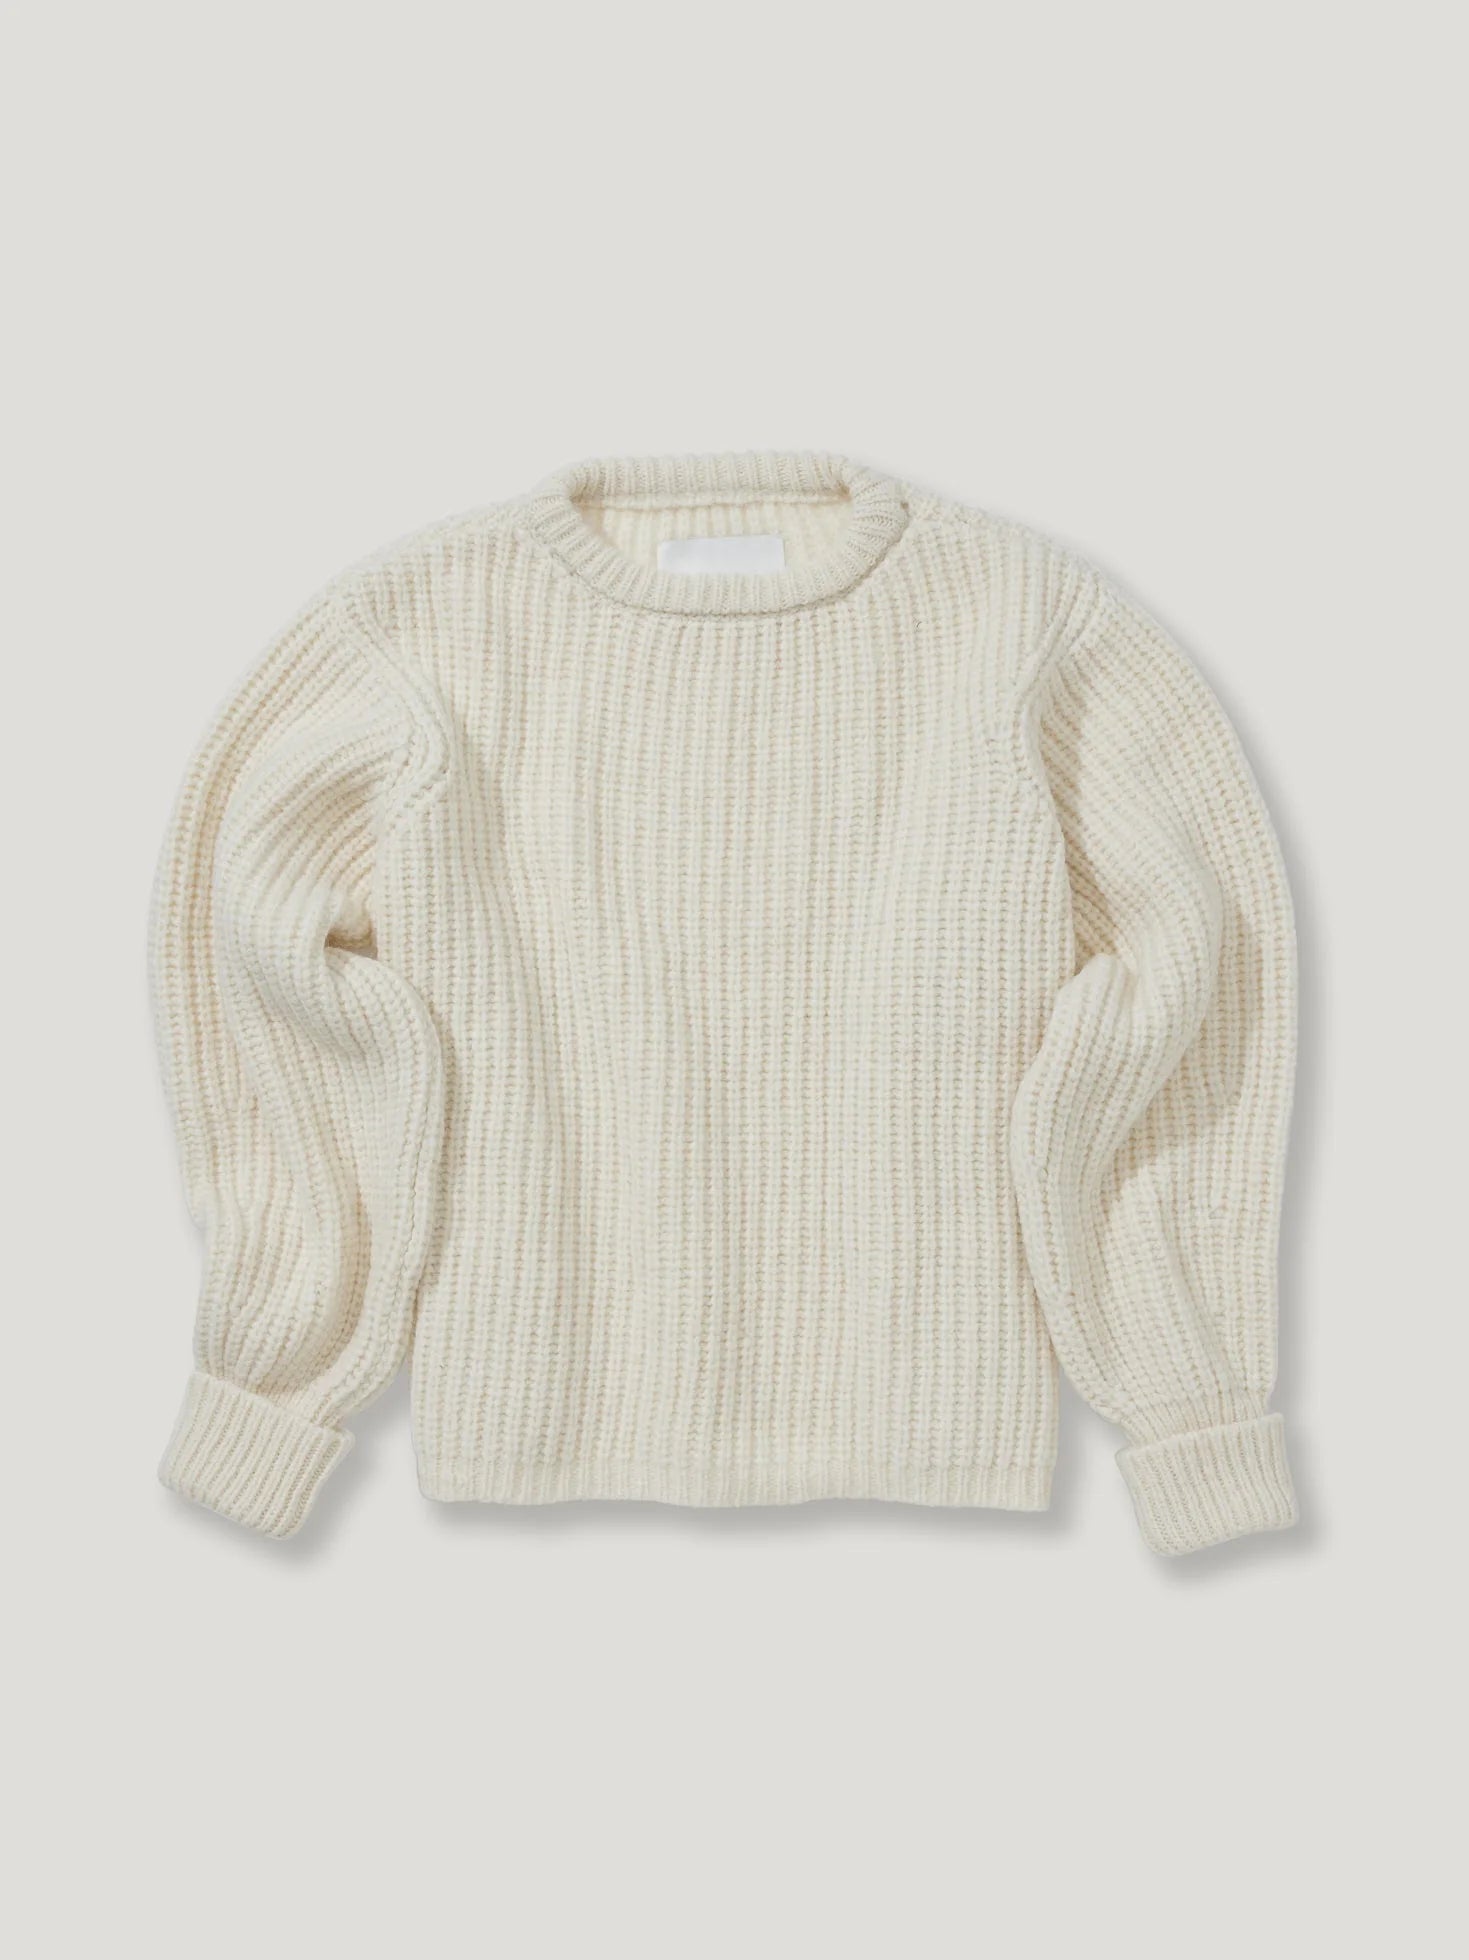 Ida knit sweater in offwhite